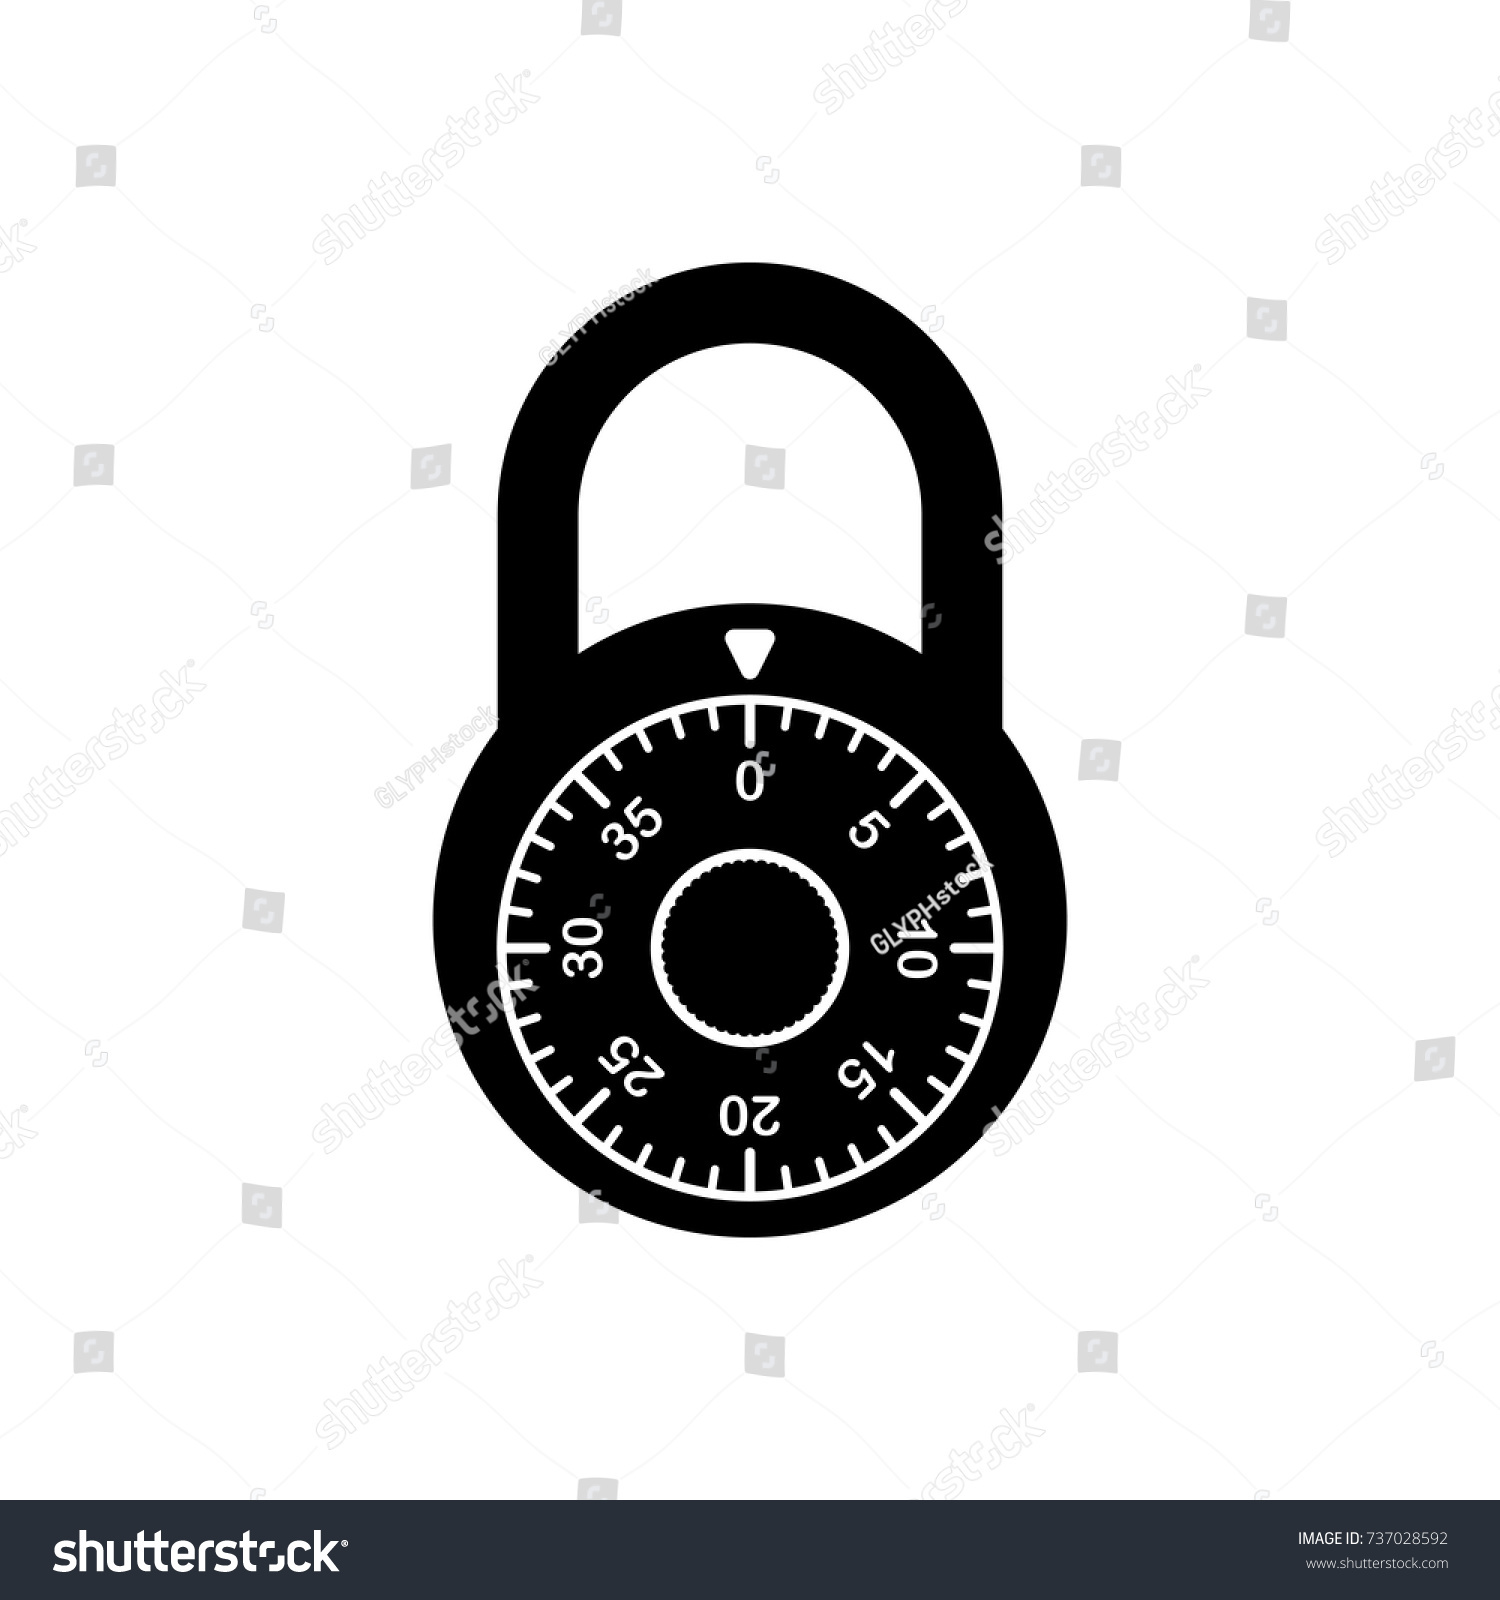 A simple combination lock icon in vector format. #737028592